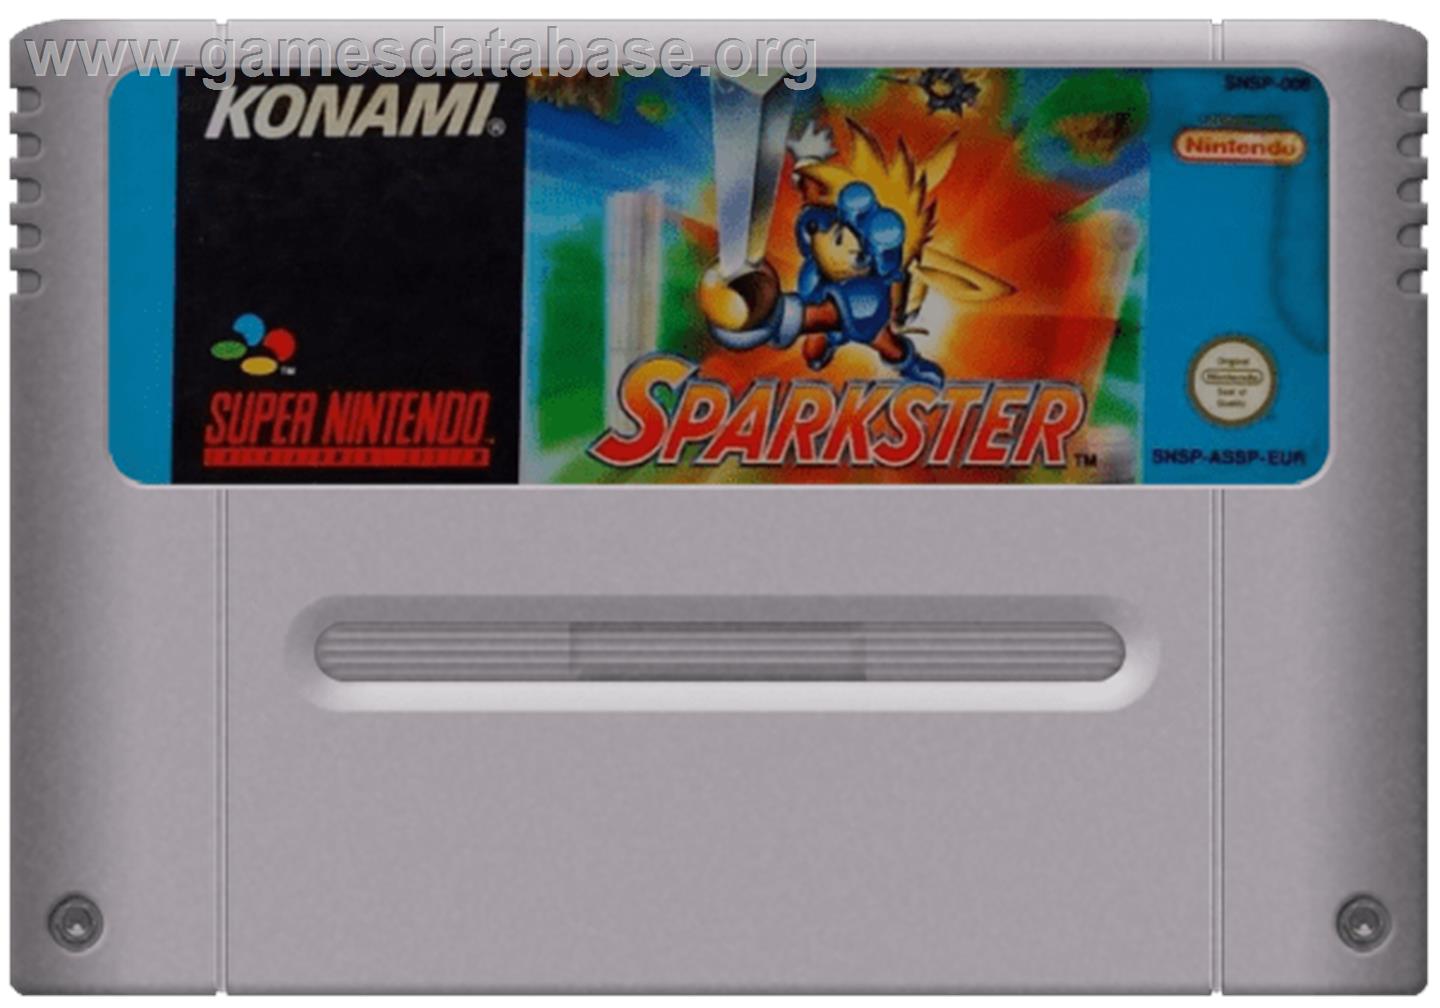 Sparkster - Nintendo SNES - Artwork - Cartridge